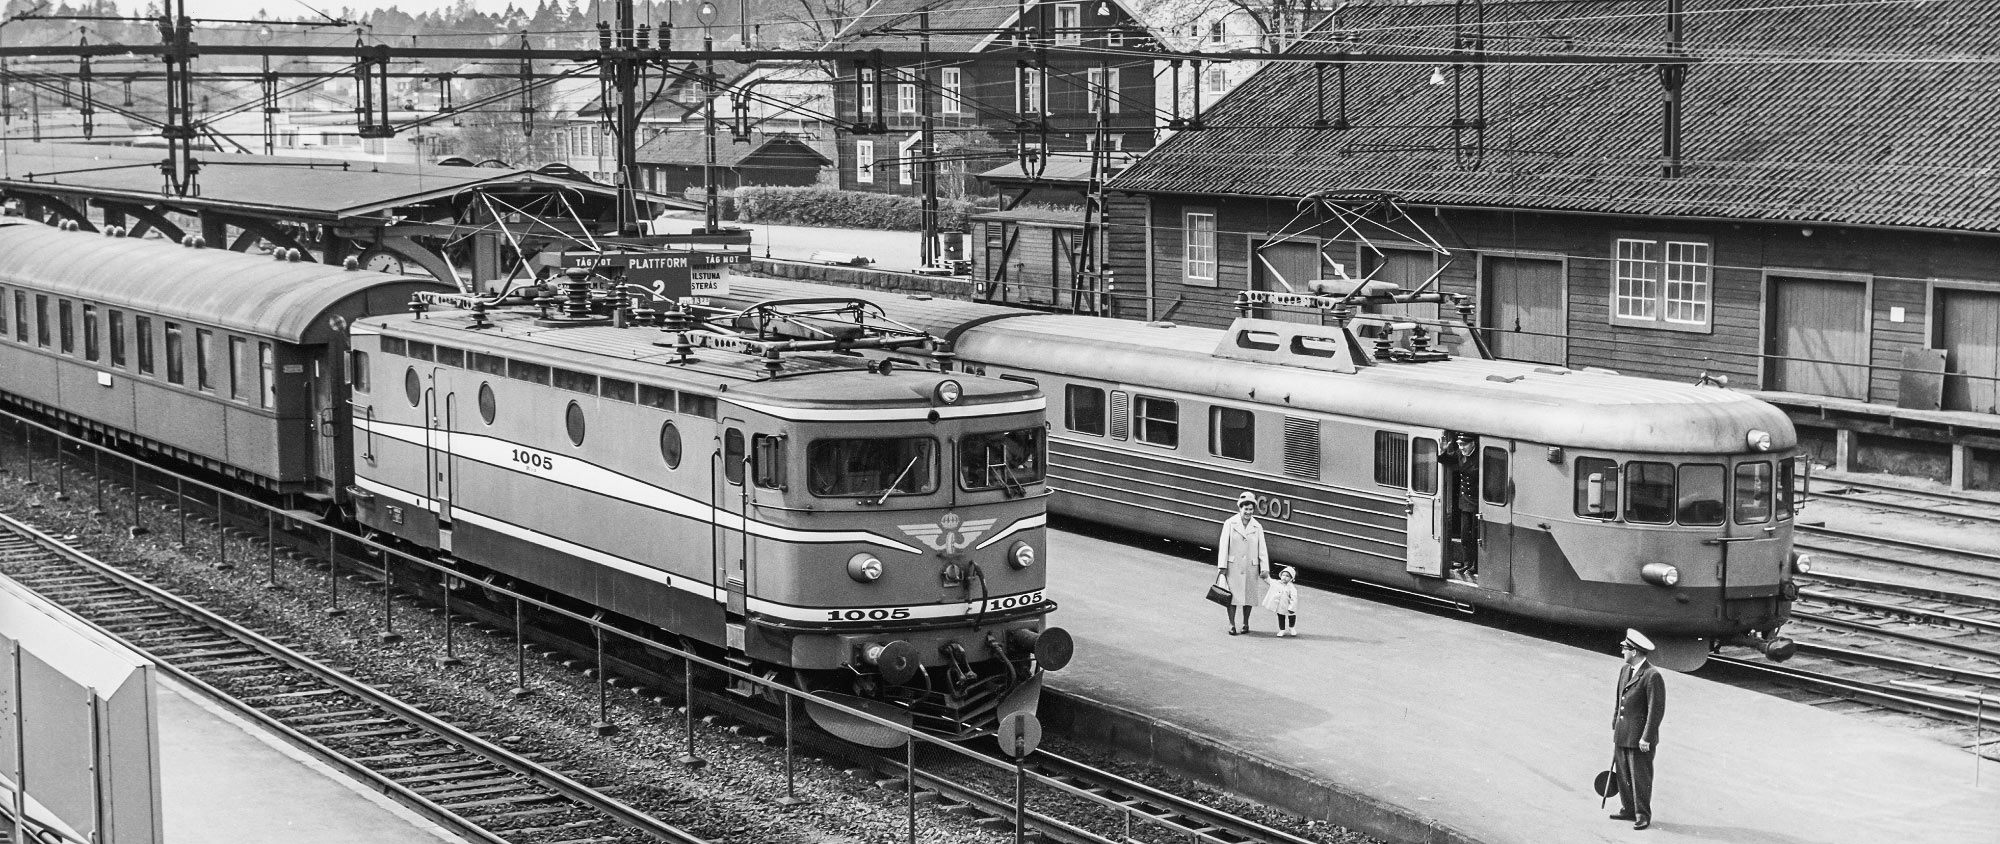 Rb3 1005 med persontåg i Flen 1964. Till höger en TGOJ Yoa202-motorvagn.